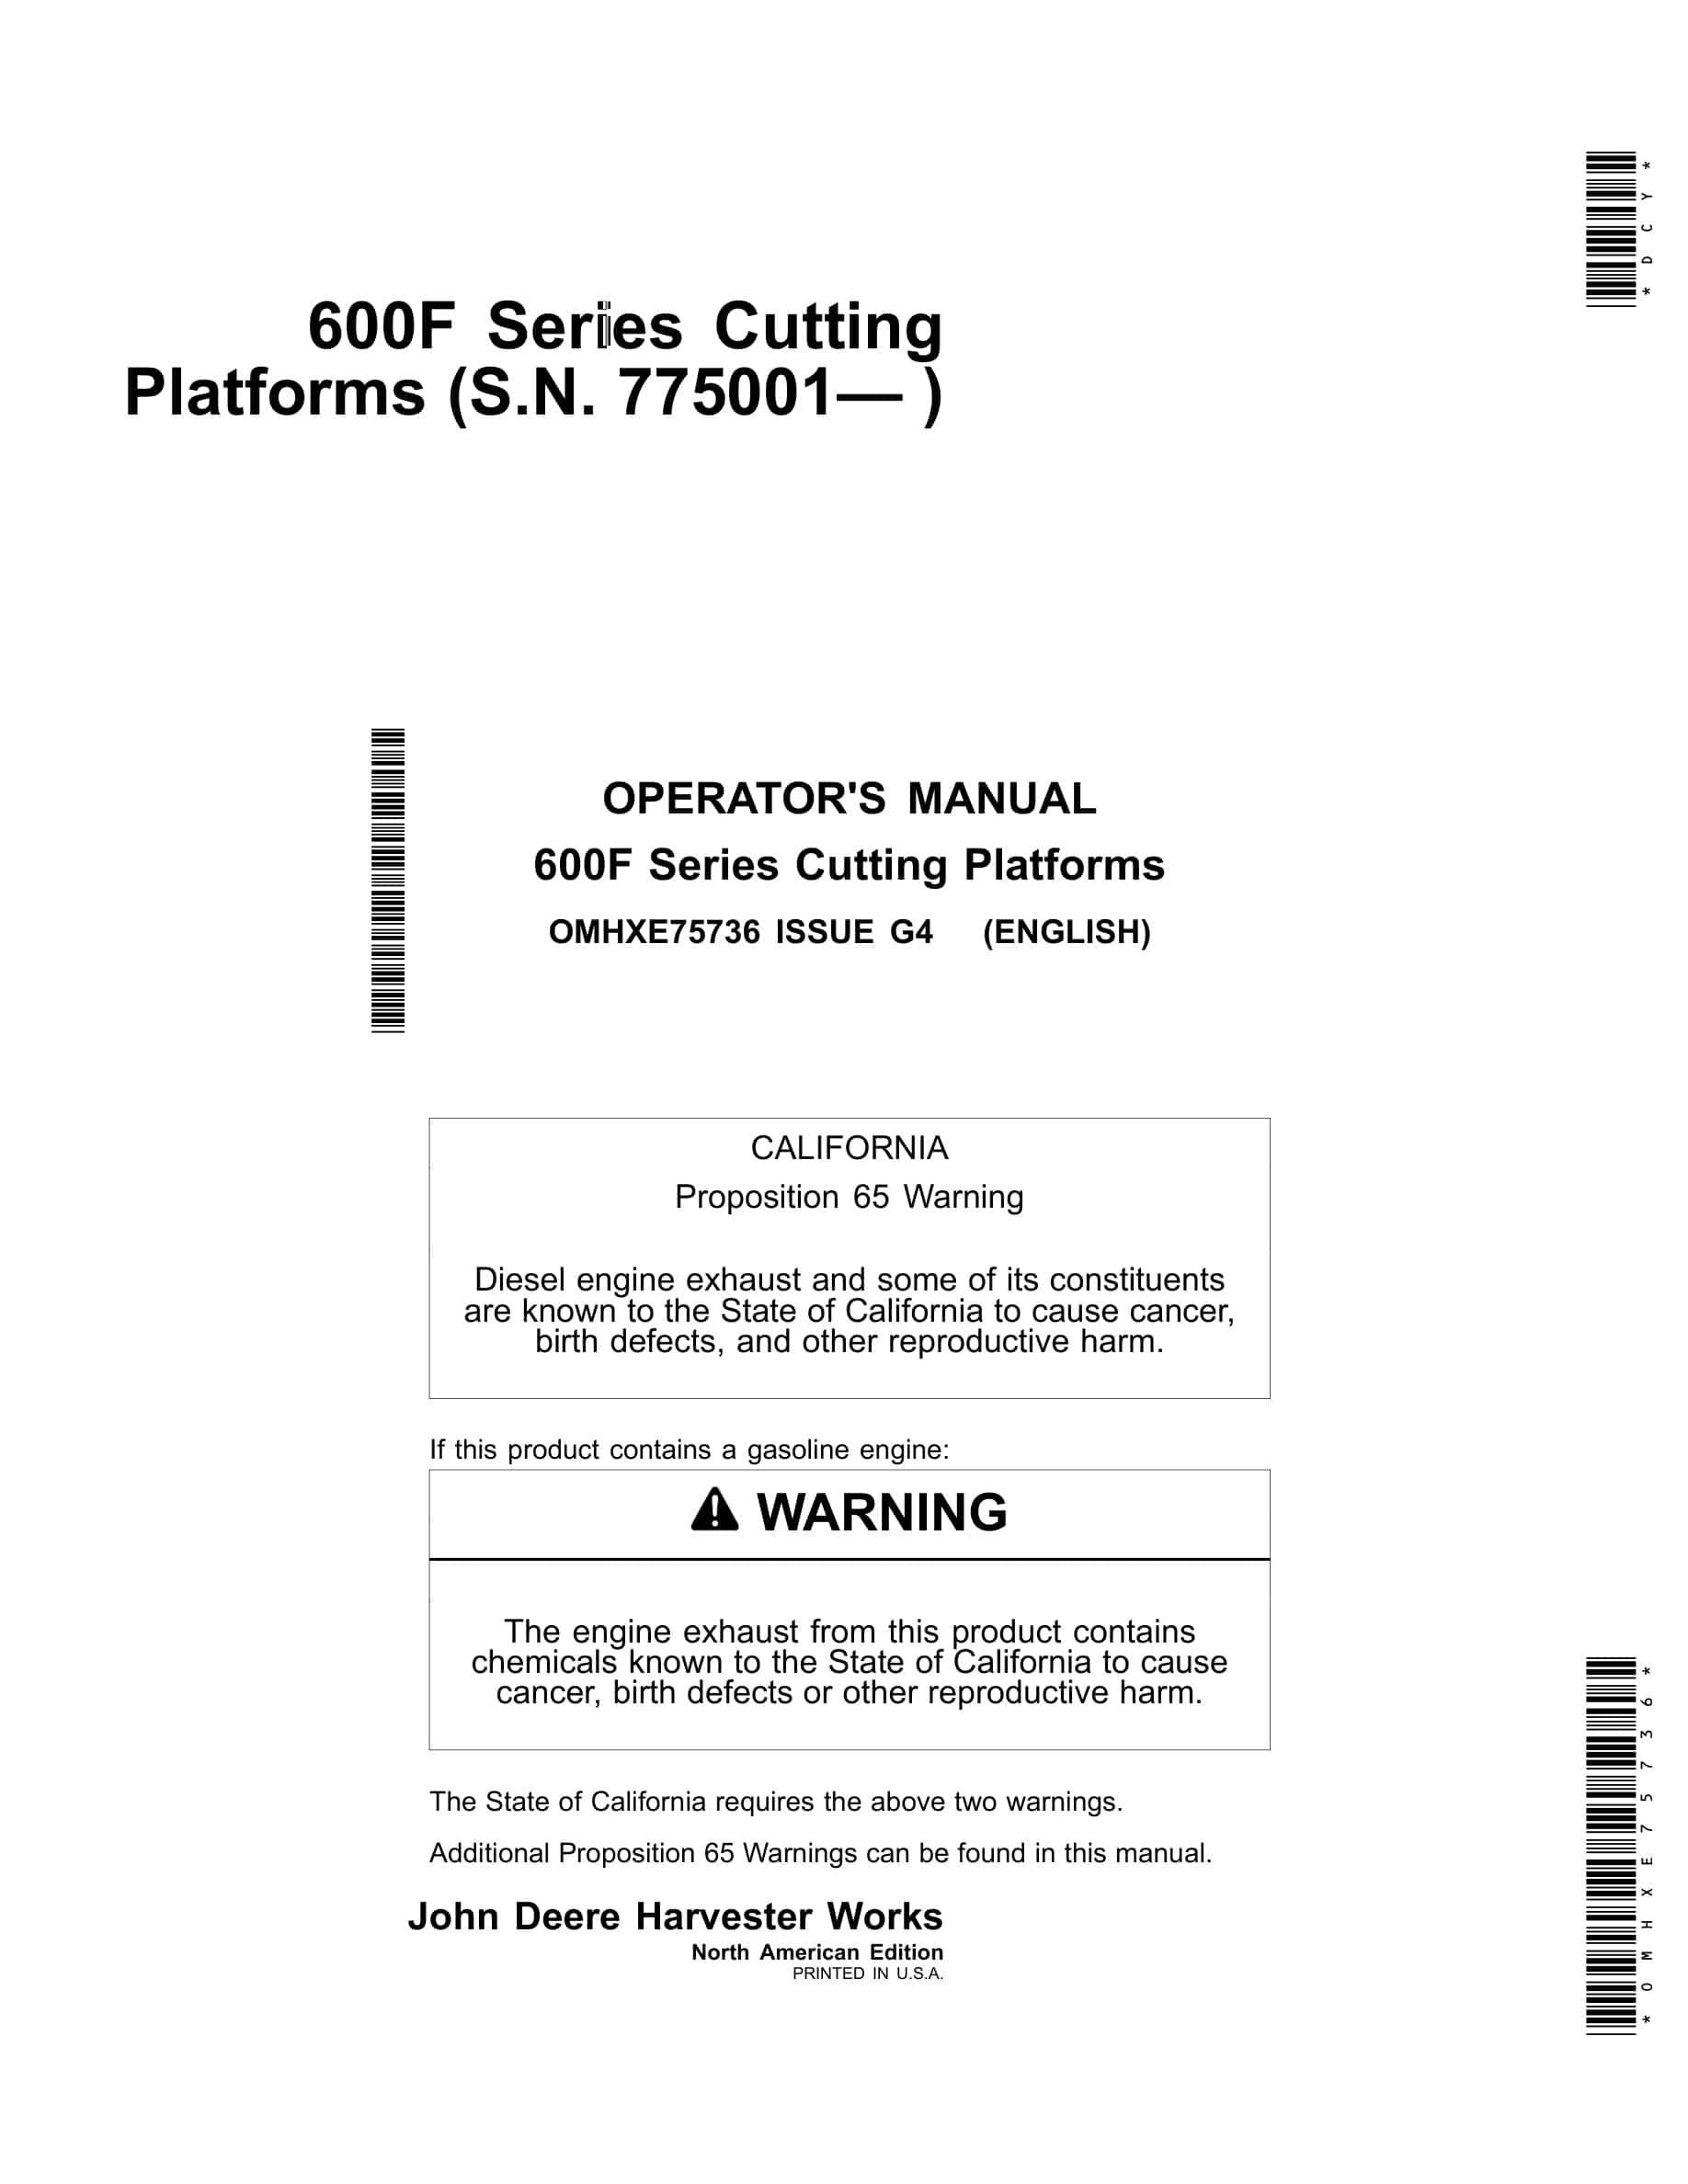 John Deere 600 F Series Cutting Platforms Operator Manual OMHXE75736-1